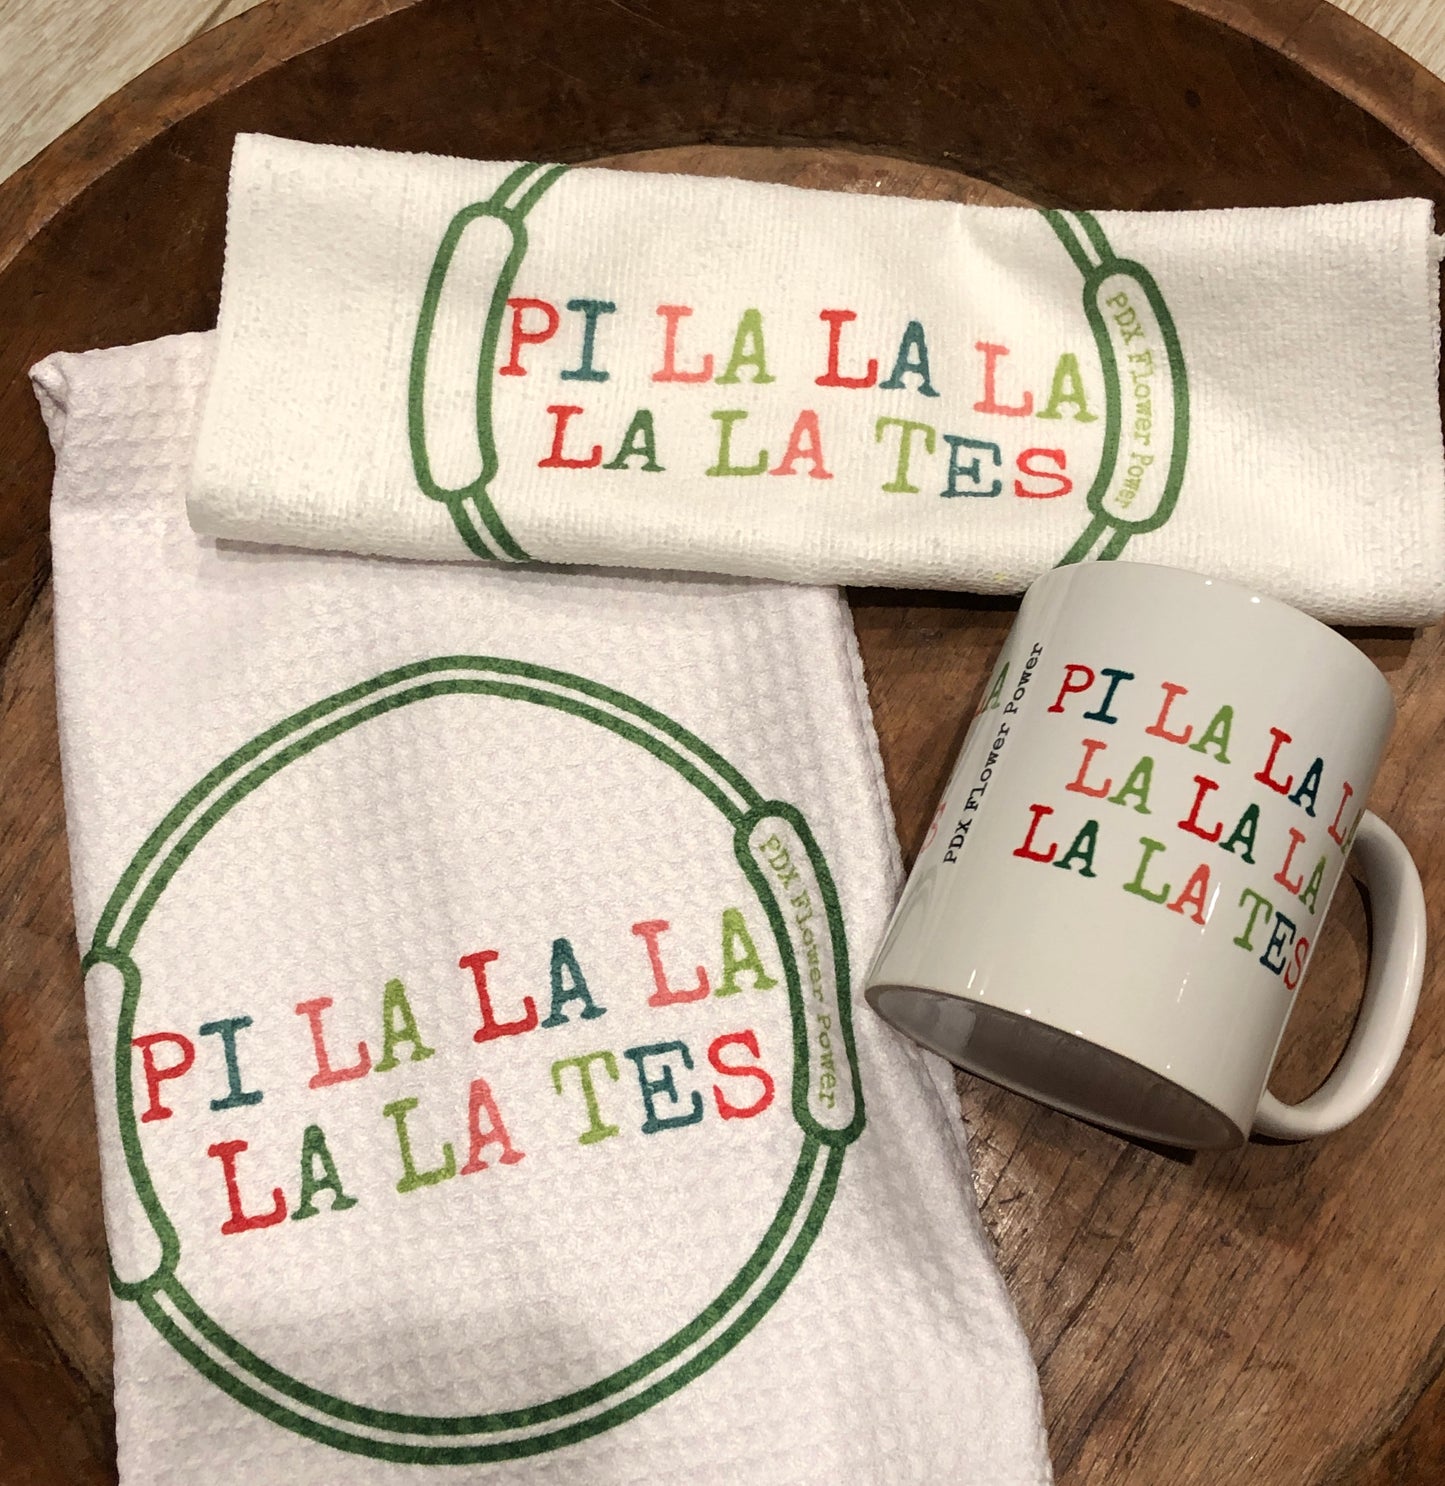 Pilates Holiday mug and towel set, gift for Pilates enthusiasts, pilates instructors. Pi la la la la tes gift set.